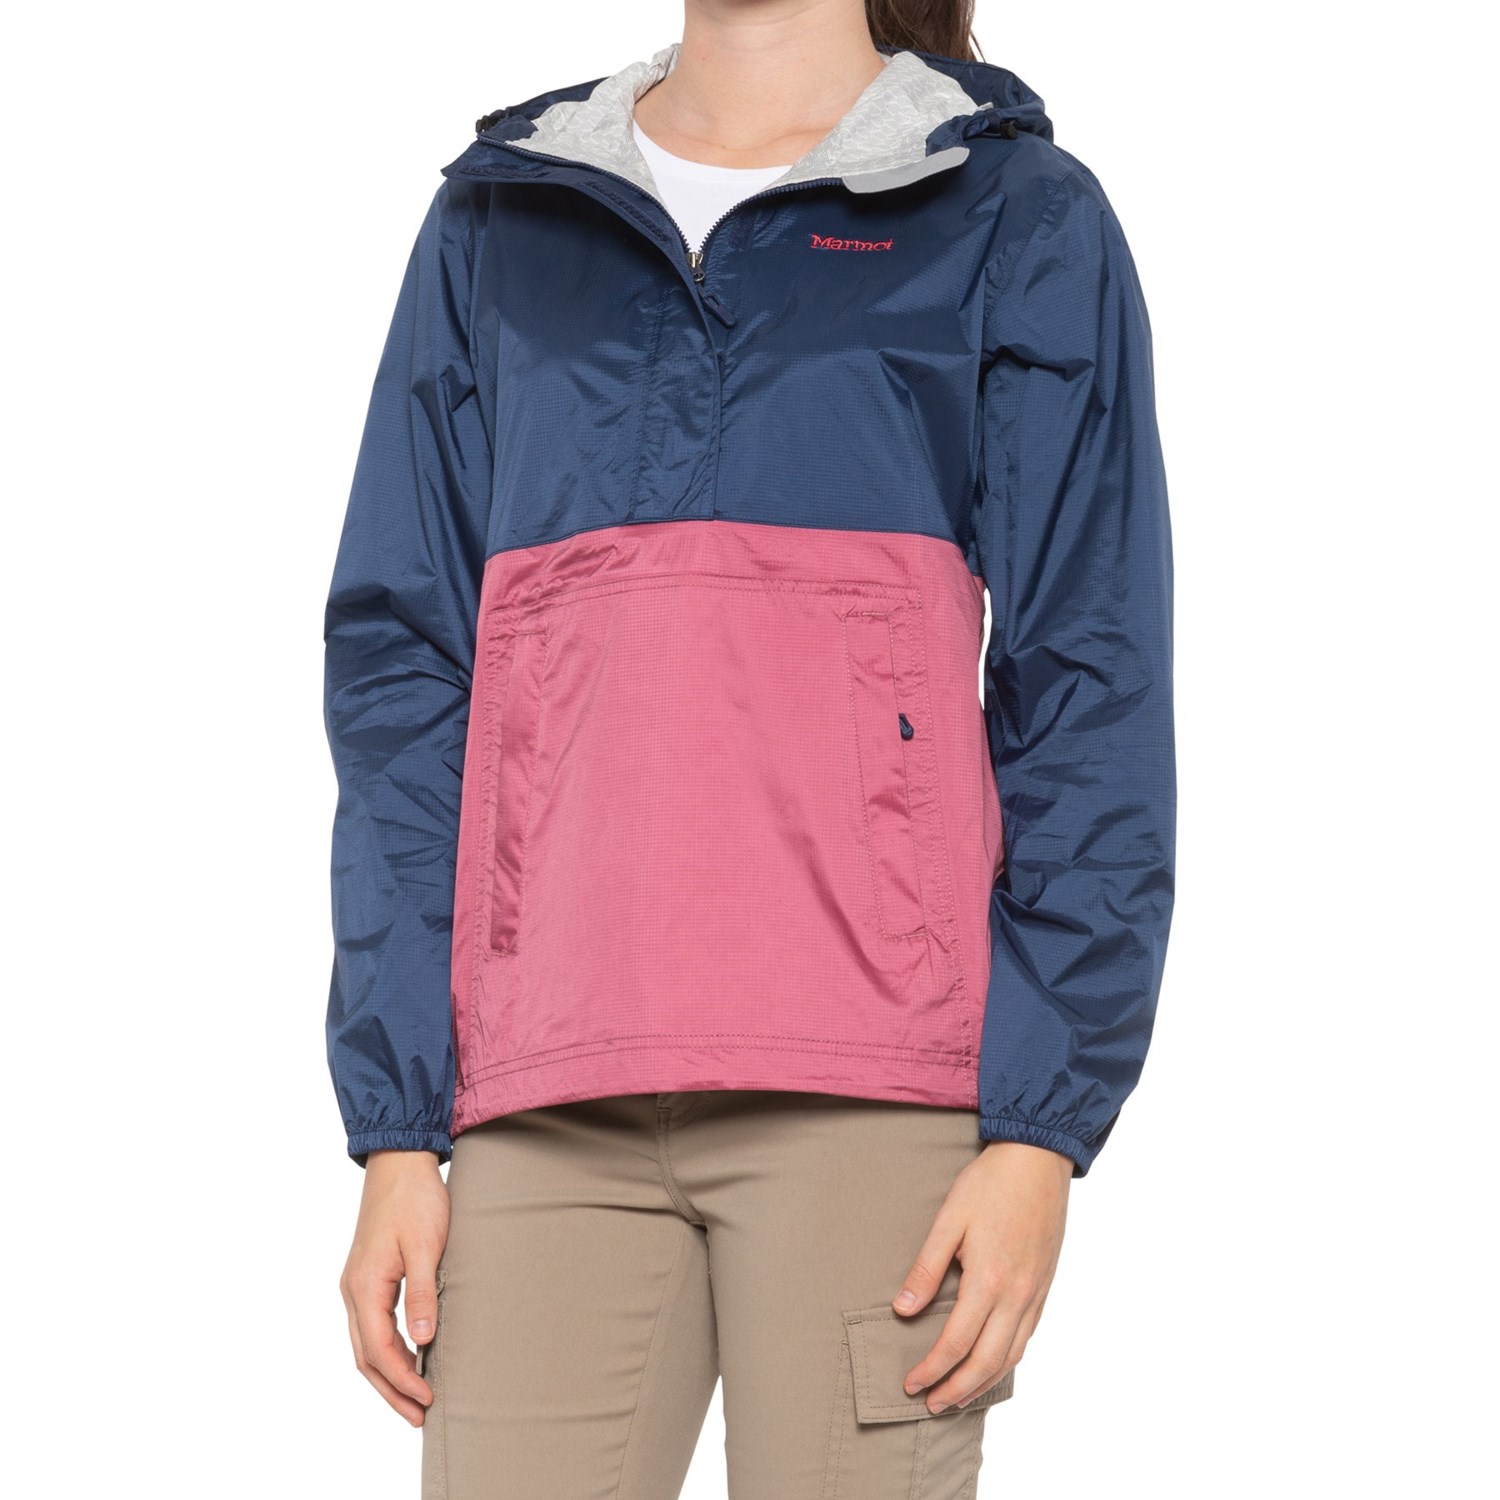 waterproof women's rain anorak jacket